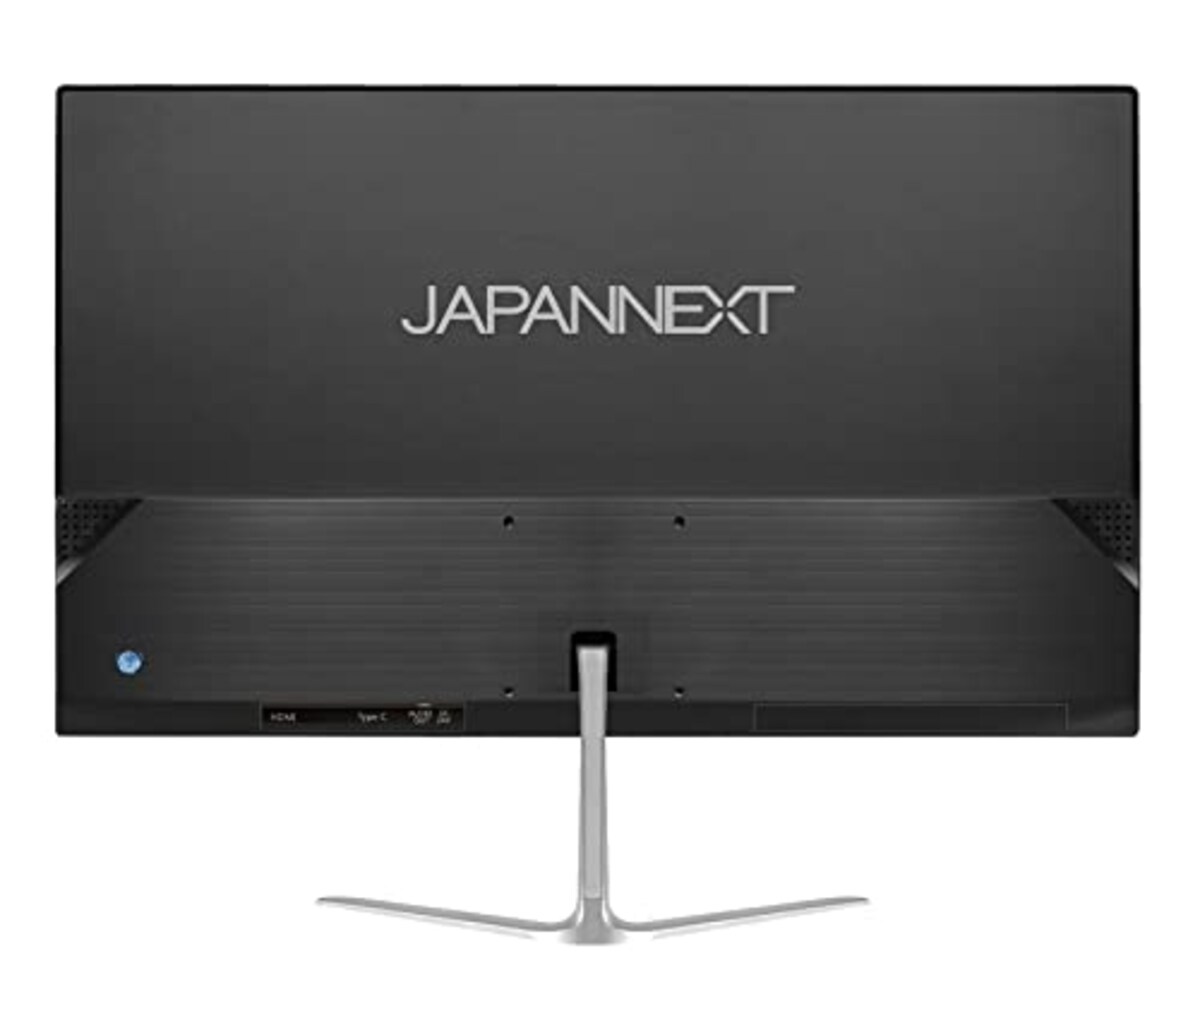  JAPANNEXT 21.5インチIPSパネル搭載 フルHD液晶モニター JN-IPS215FHD-C65W HDMI USB-C(65W給電）sRGB95%画像2 